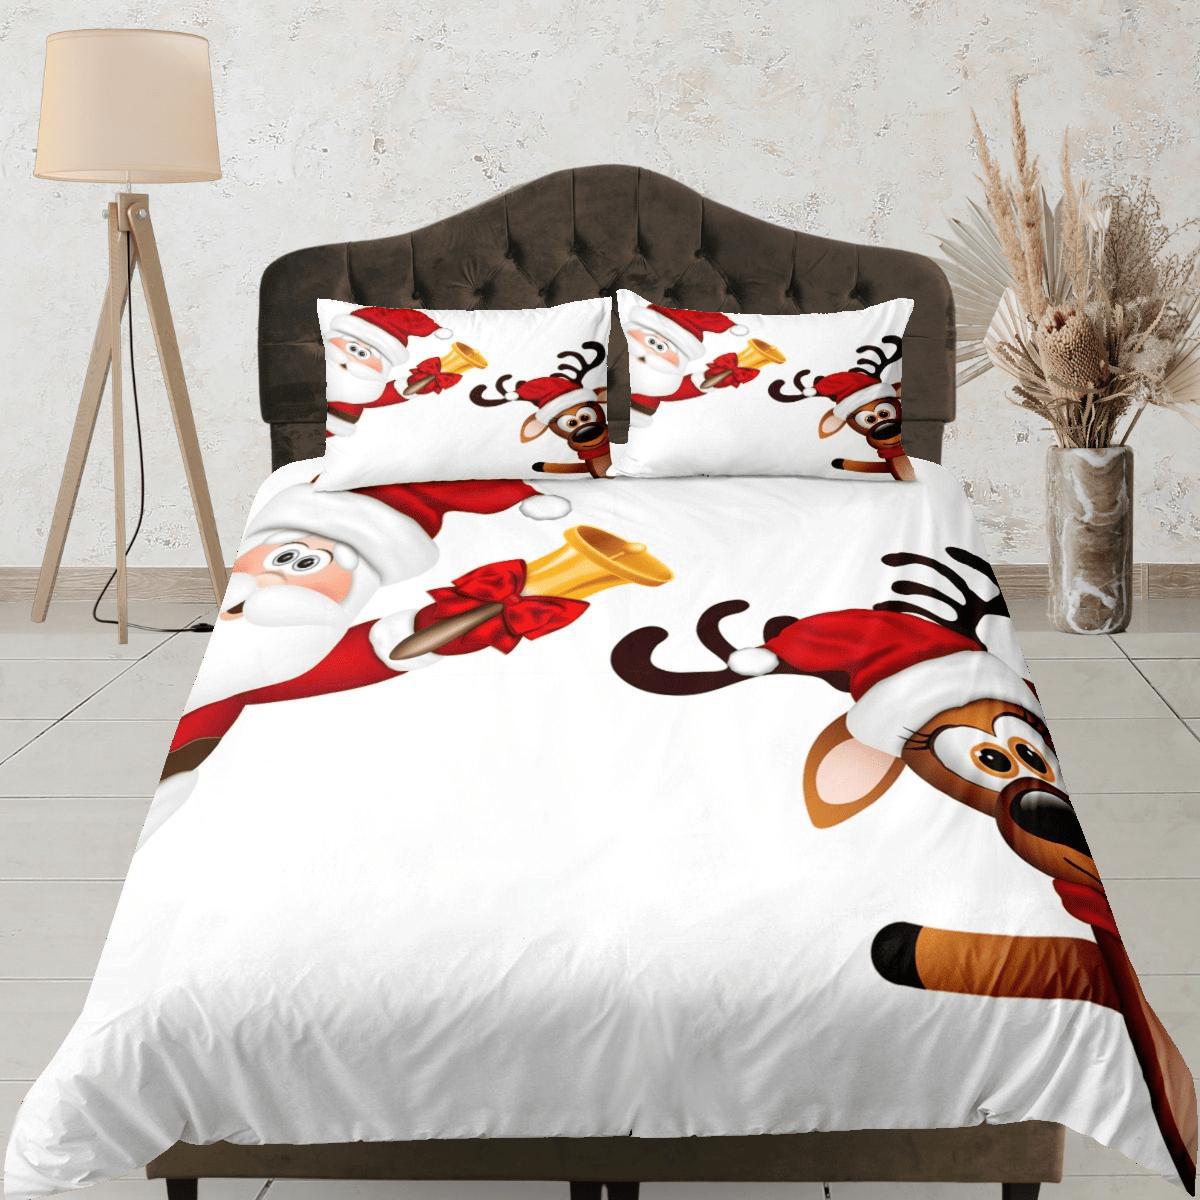 daintyduvet Christmas Duvet Cover Set with Pillows Santa Claus Dorm Bedding Comforter Cover Christmas Gift